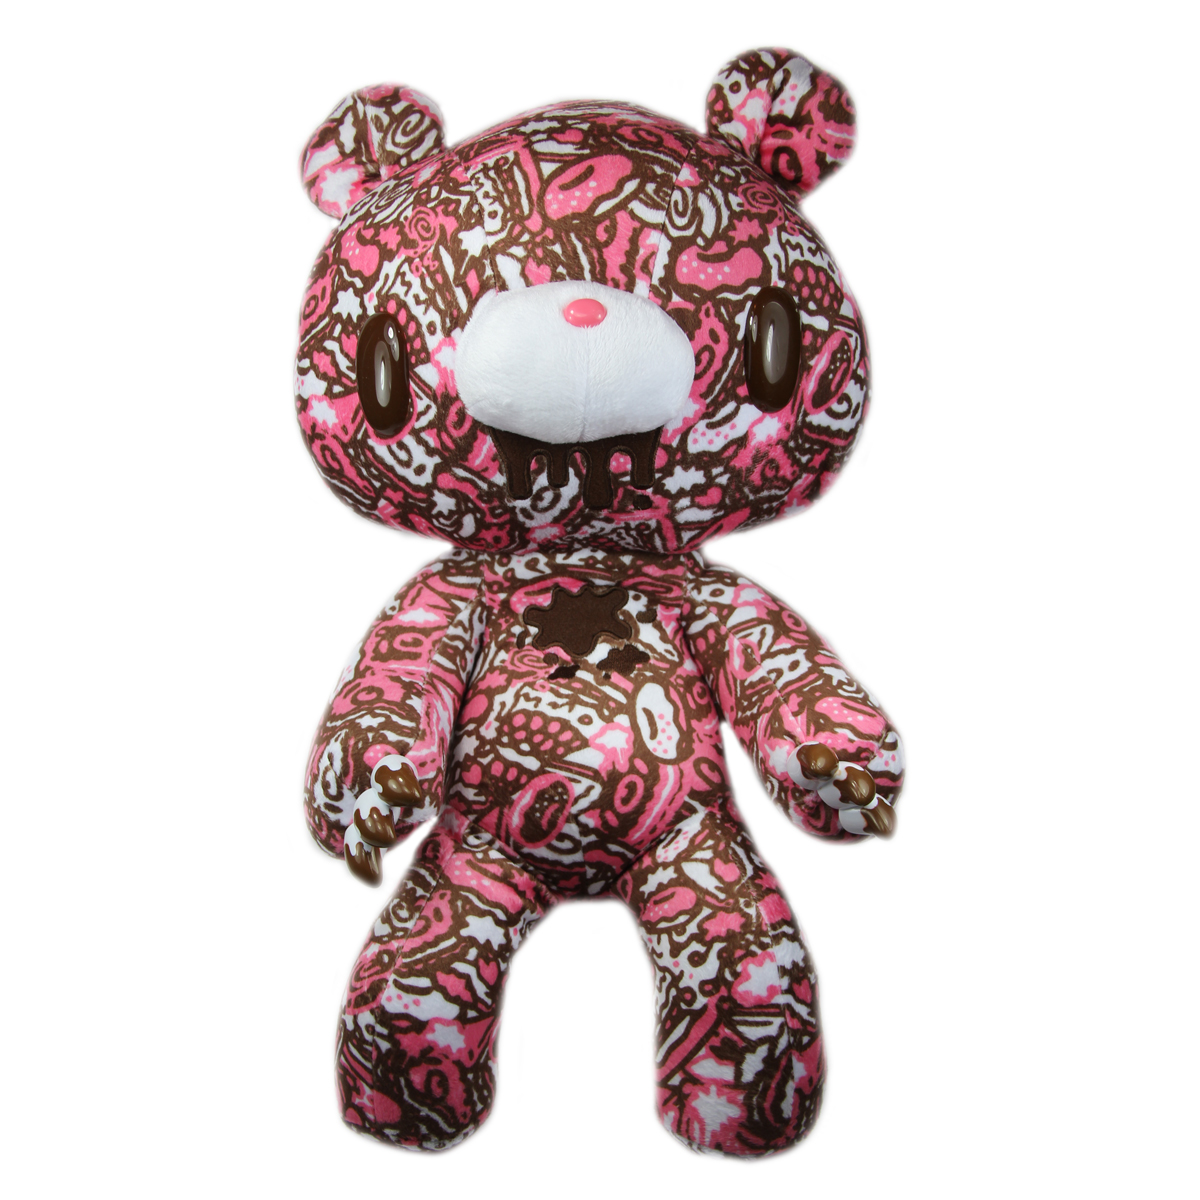 Taito Textillic Gloomy Bear Plush Doll Pink Brown GP #523 17 Inches